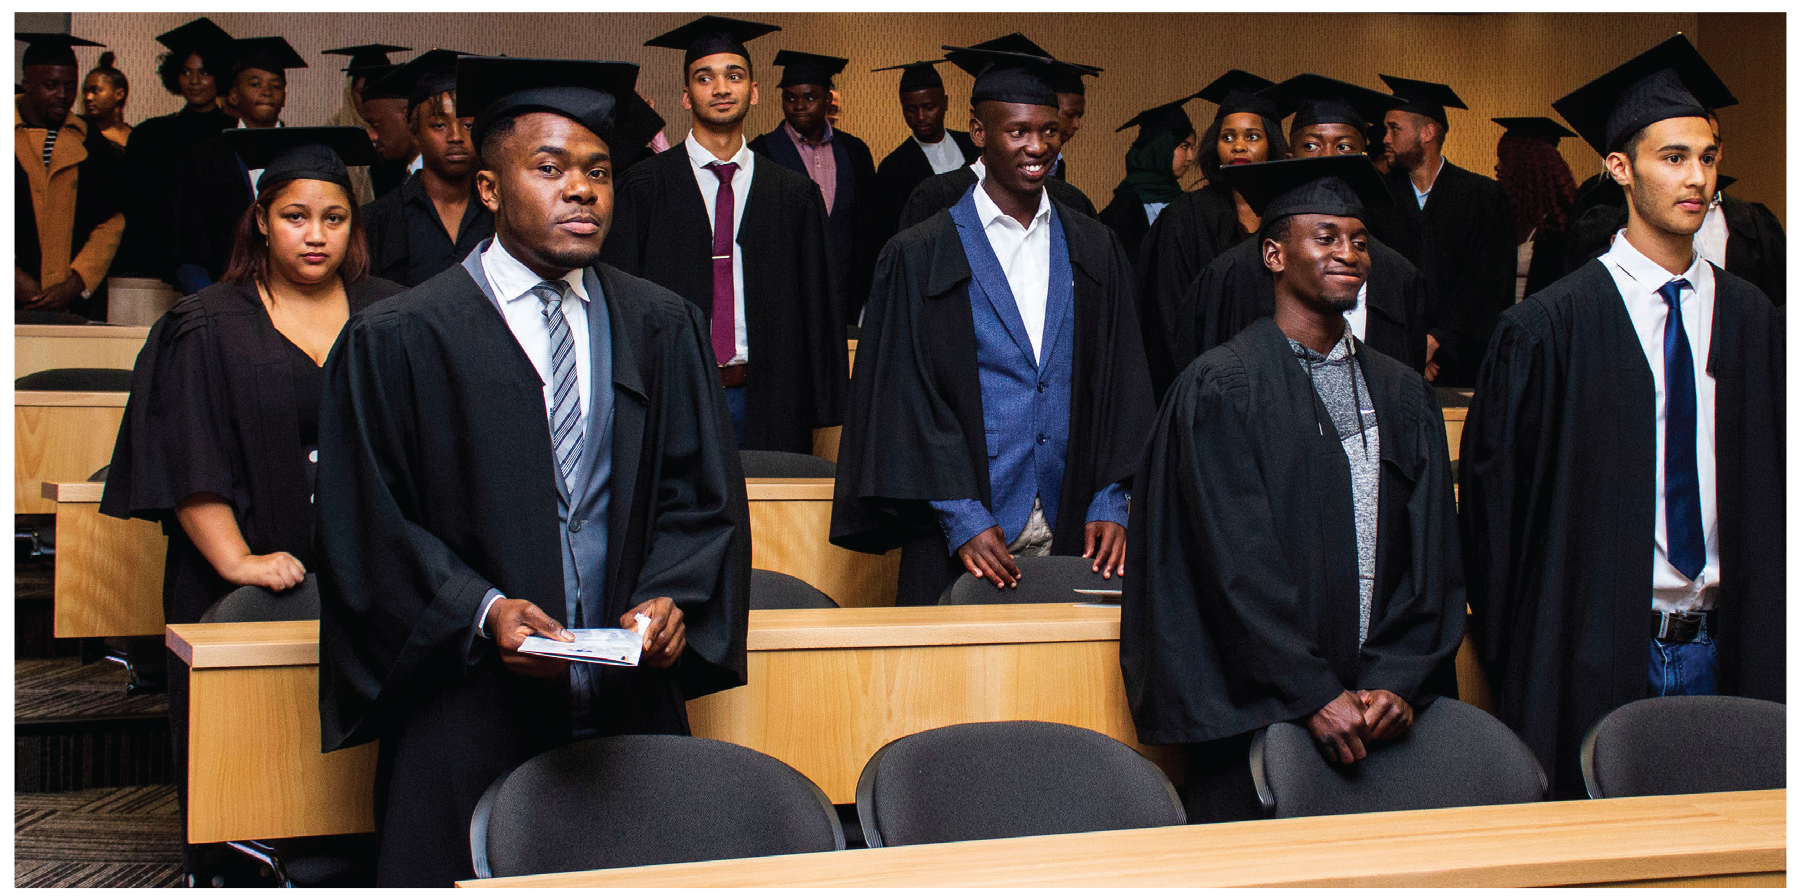 image of graduates